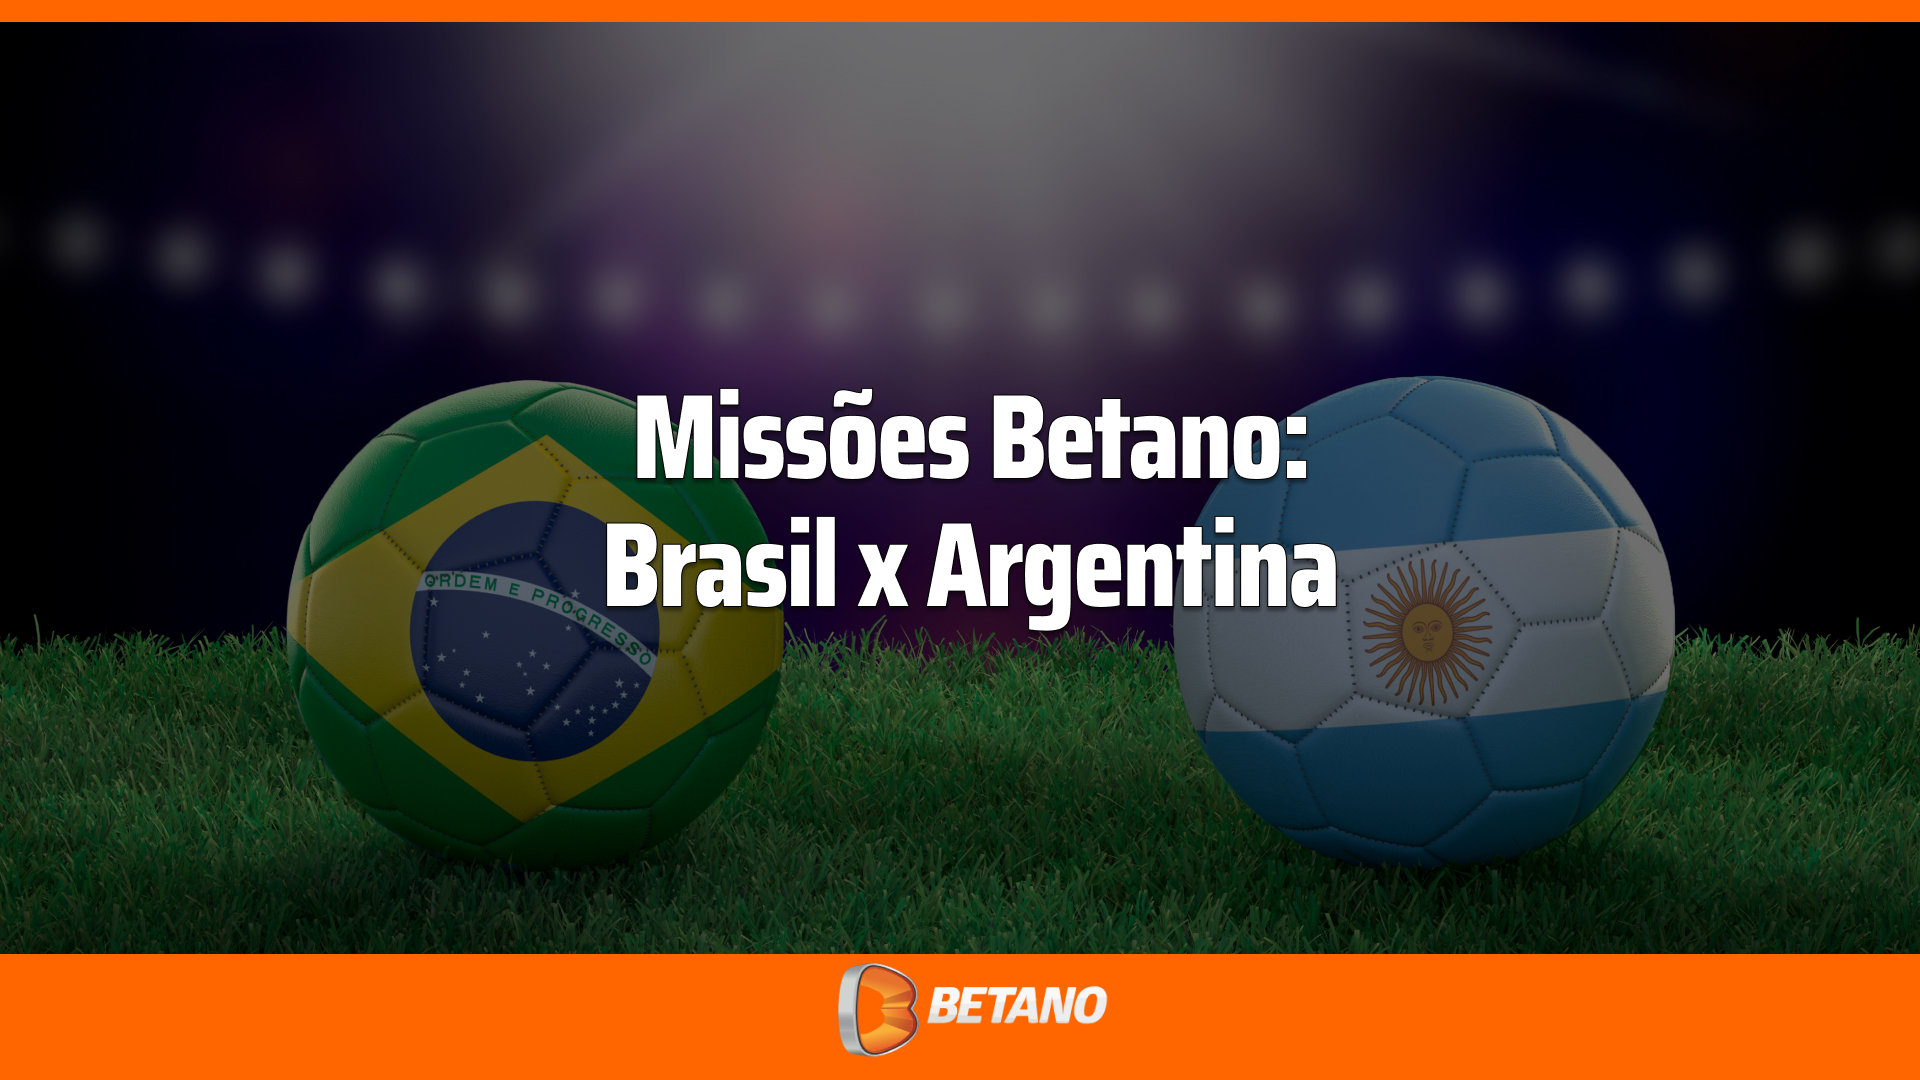 Missões Betano: participe na missão para Brasil x Argentina